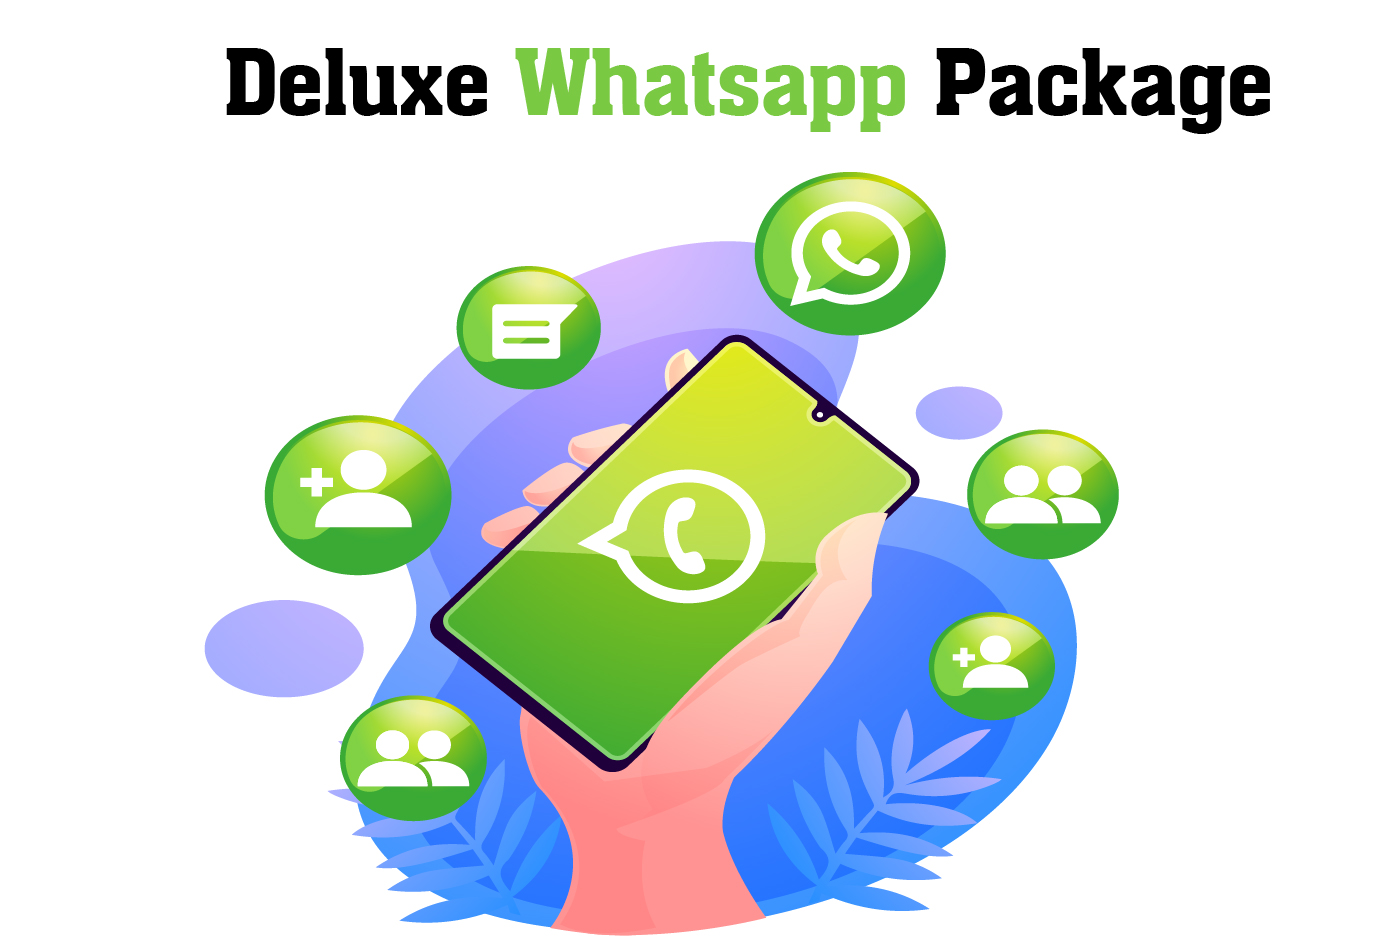 Deluxe Whatsapp Package